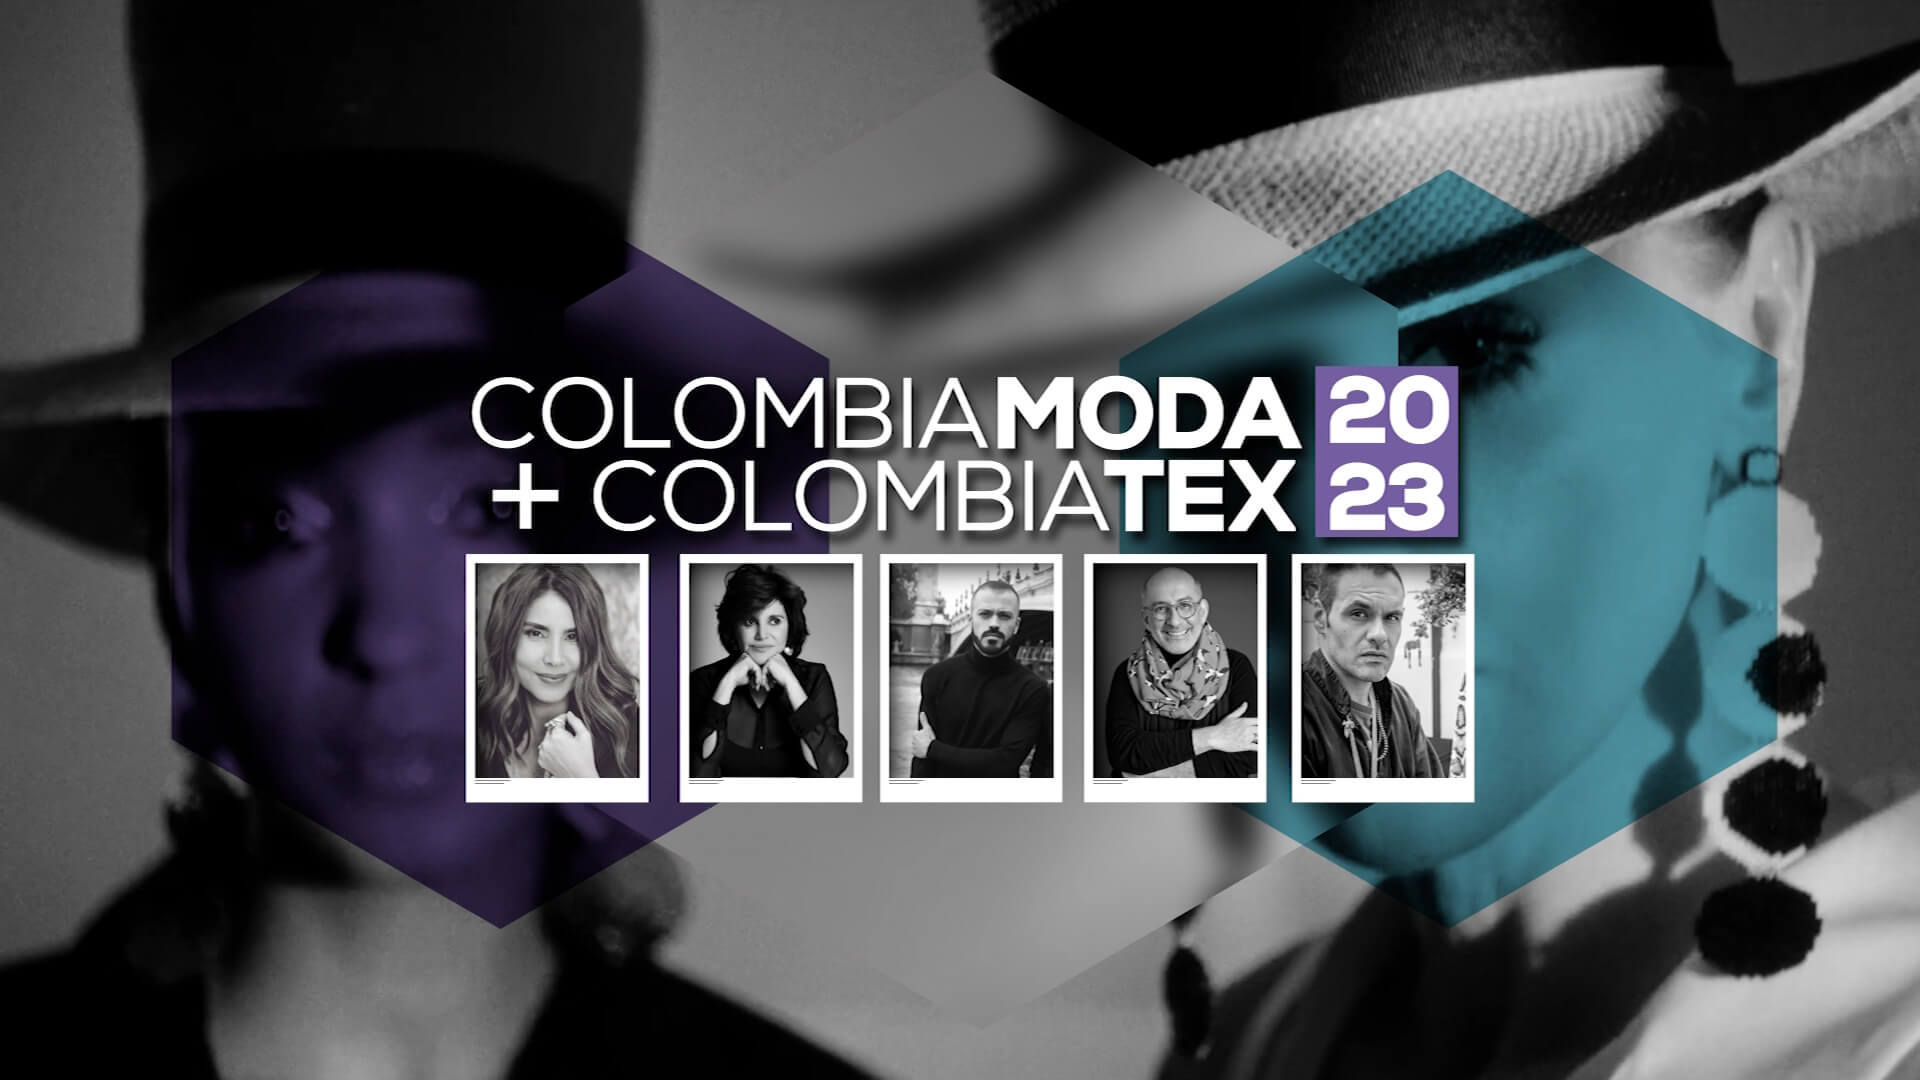 Colombiamoda+Colombiatex 2023: desfile inaugural hoy